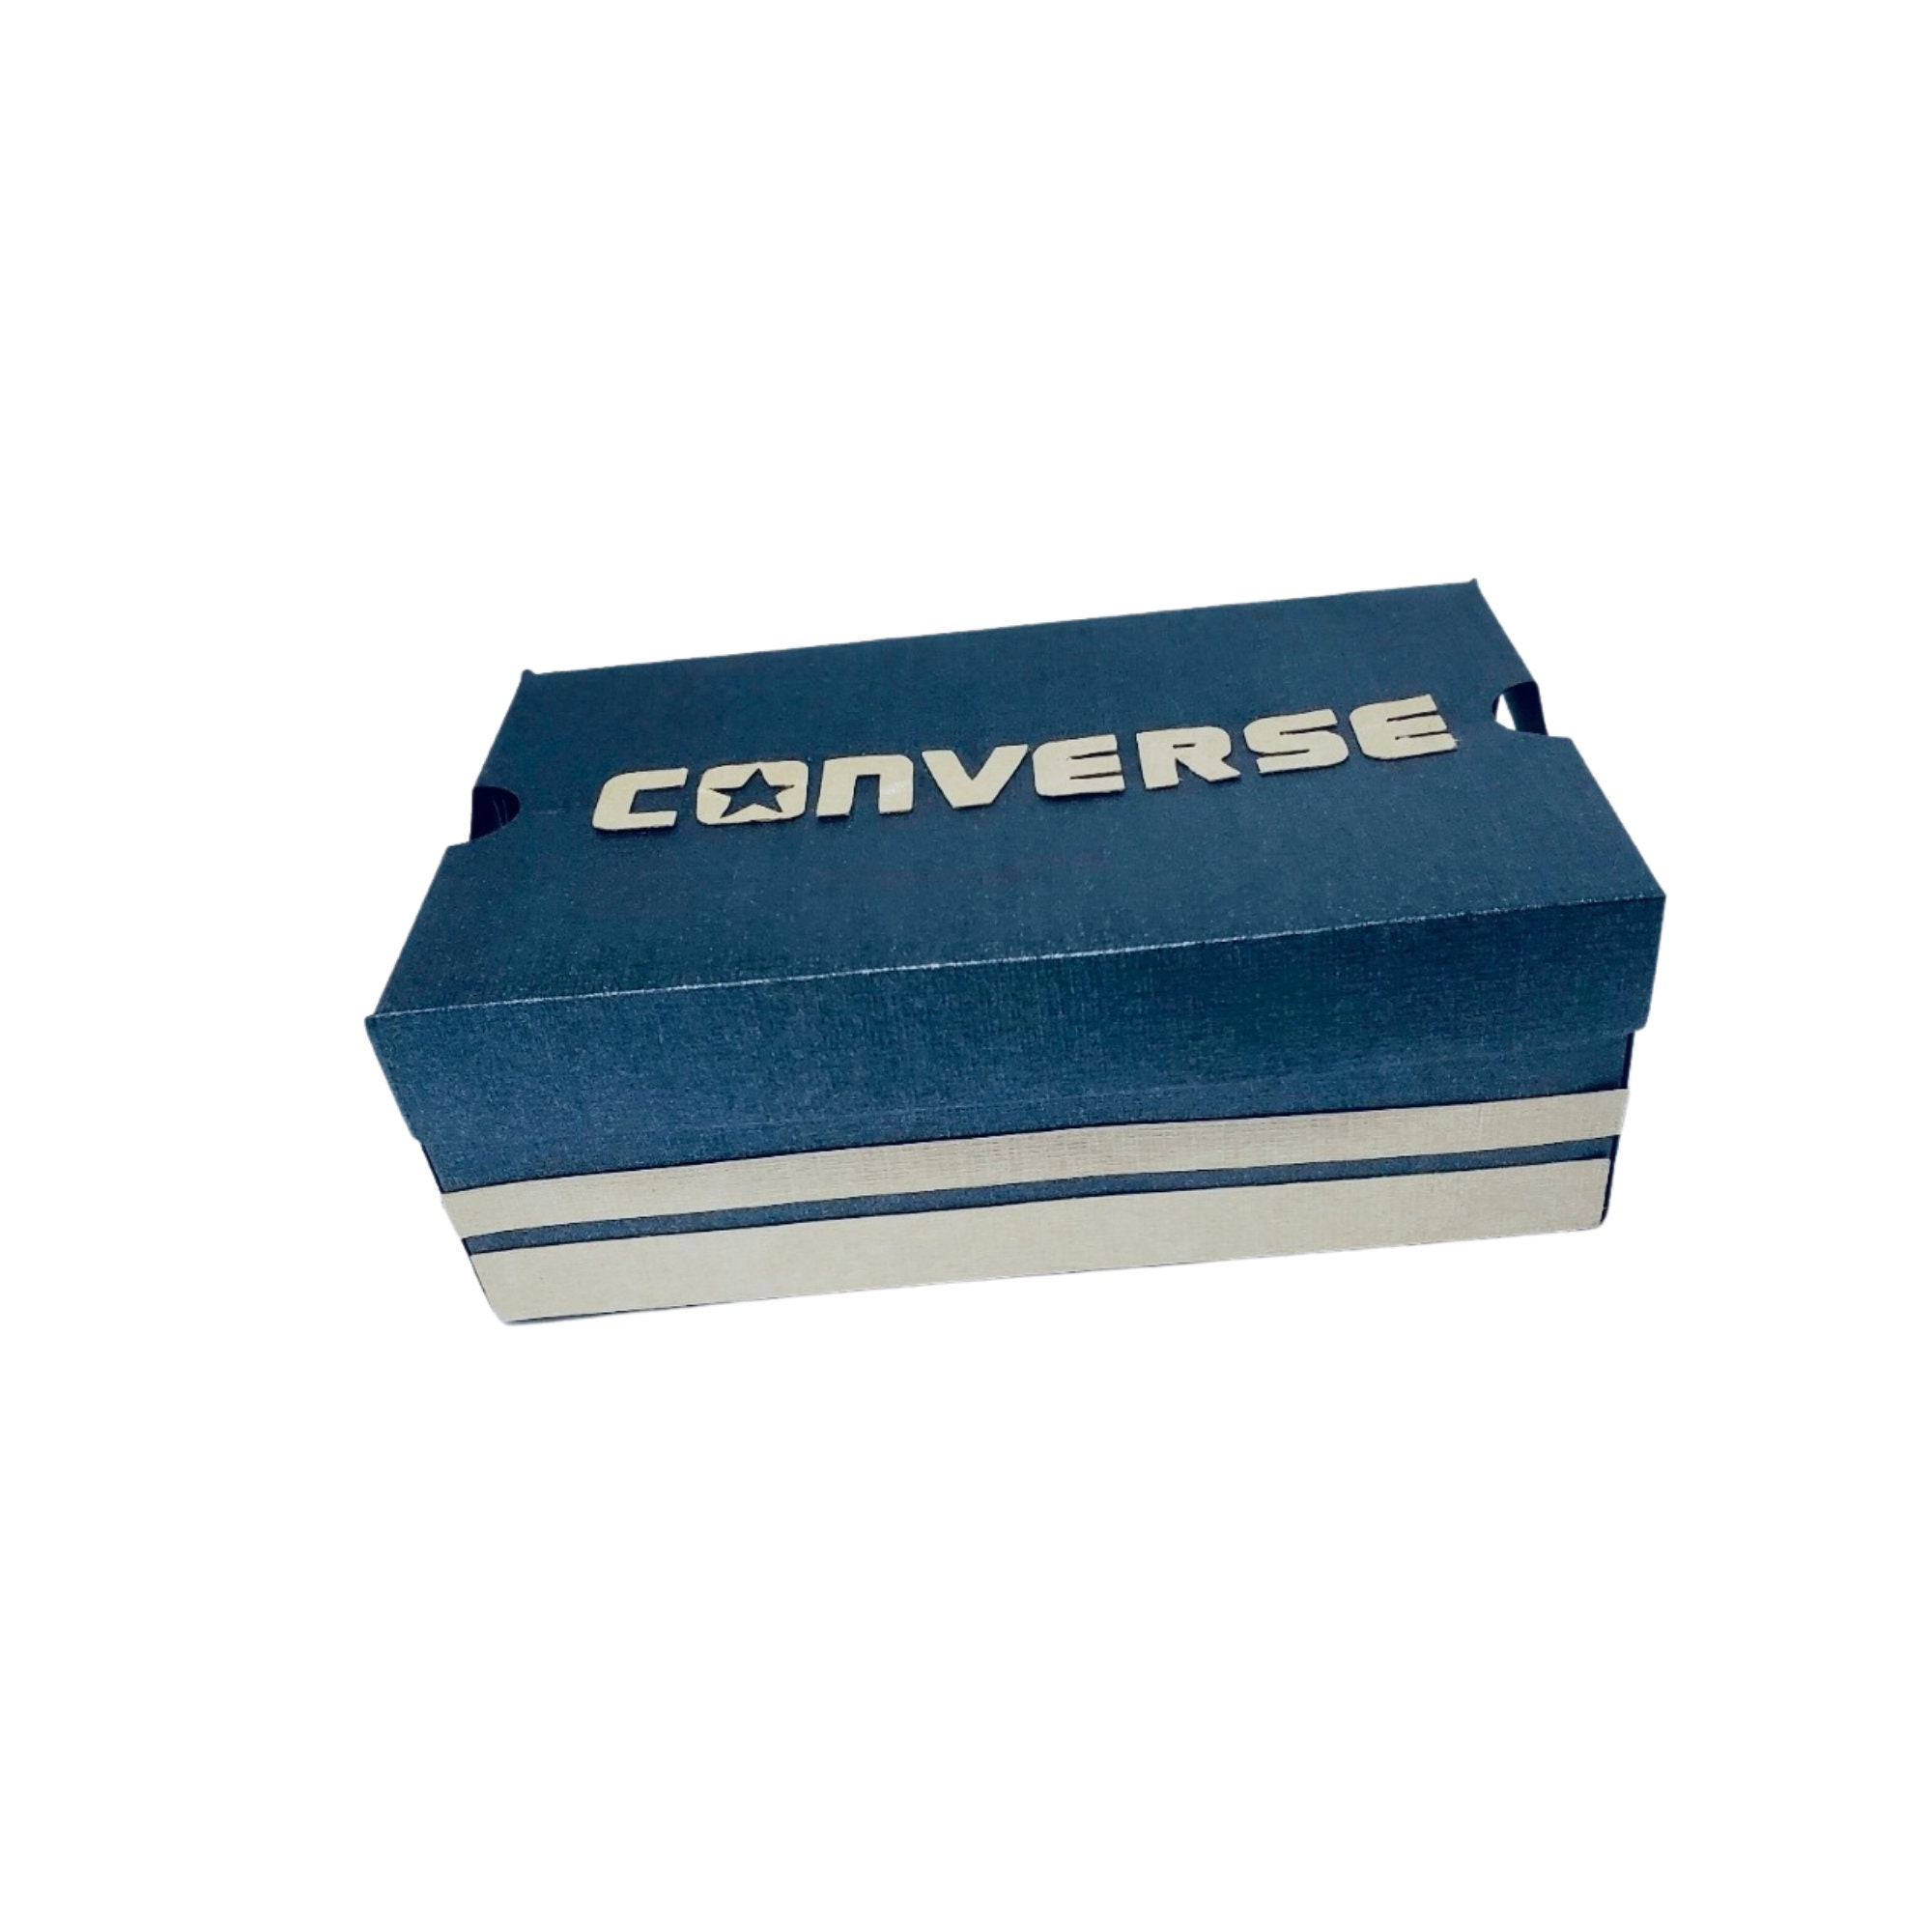 Converse box - Etsy